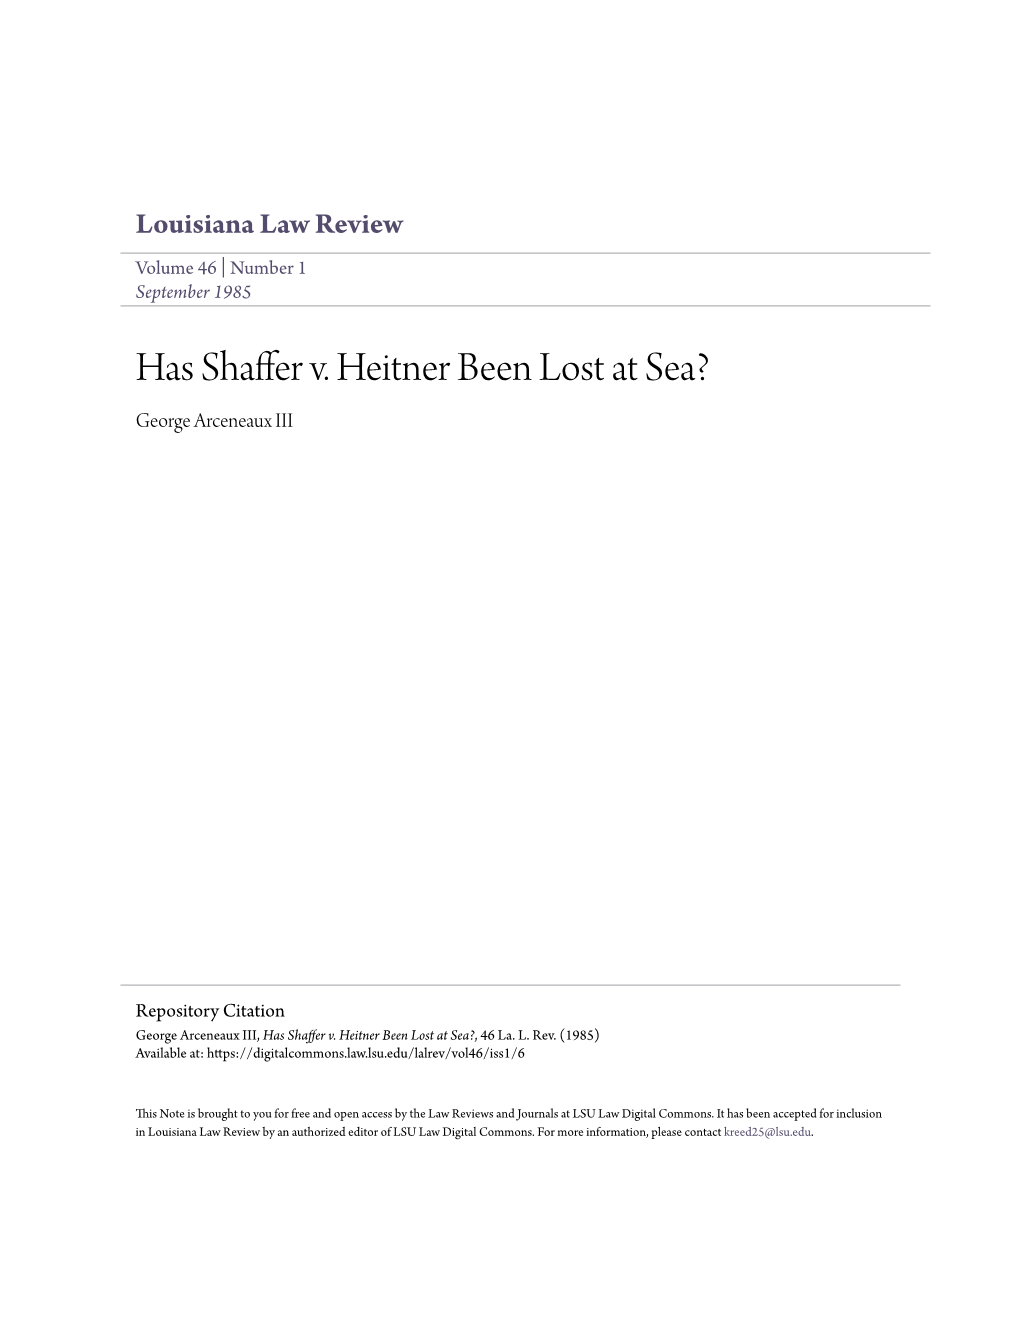 Has Shaffer V. Heitner Been Lost at Sea? George Arceneaux III